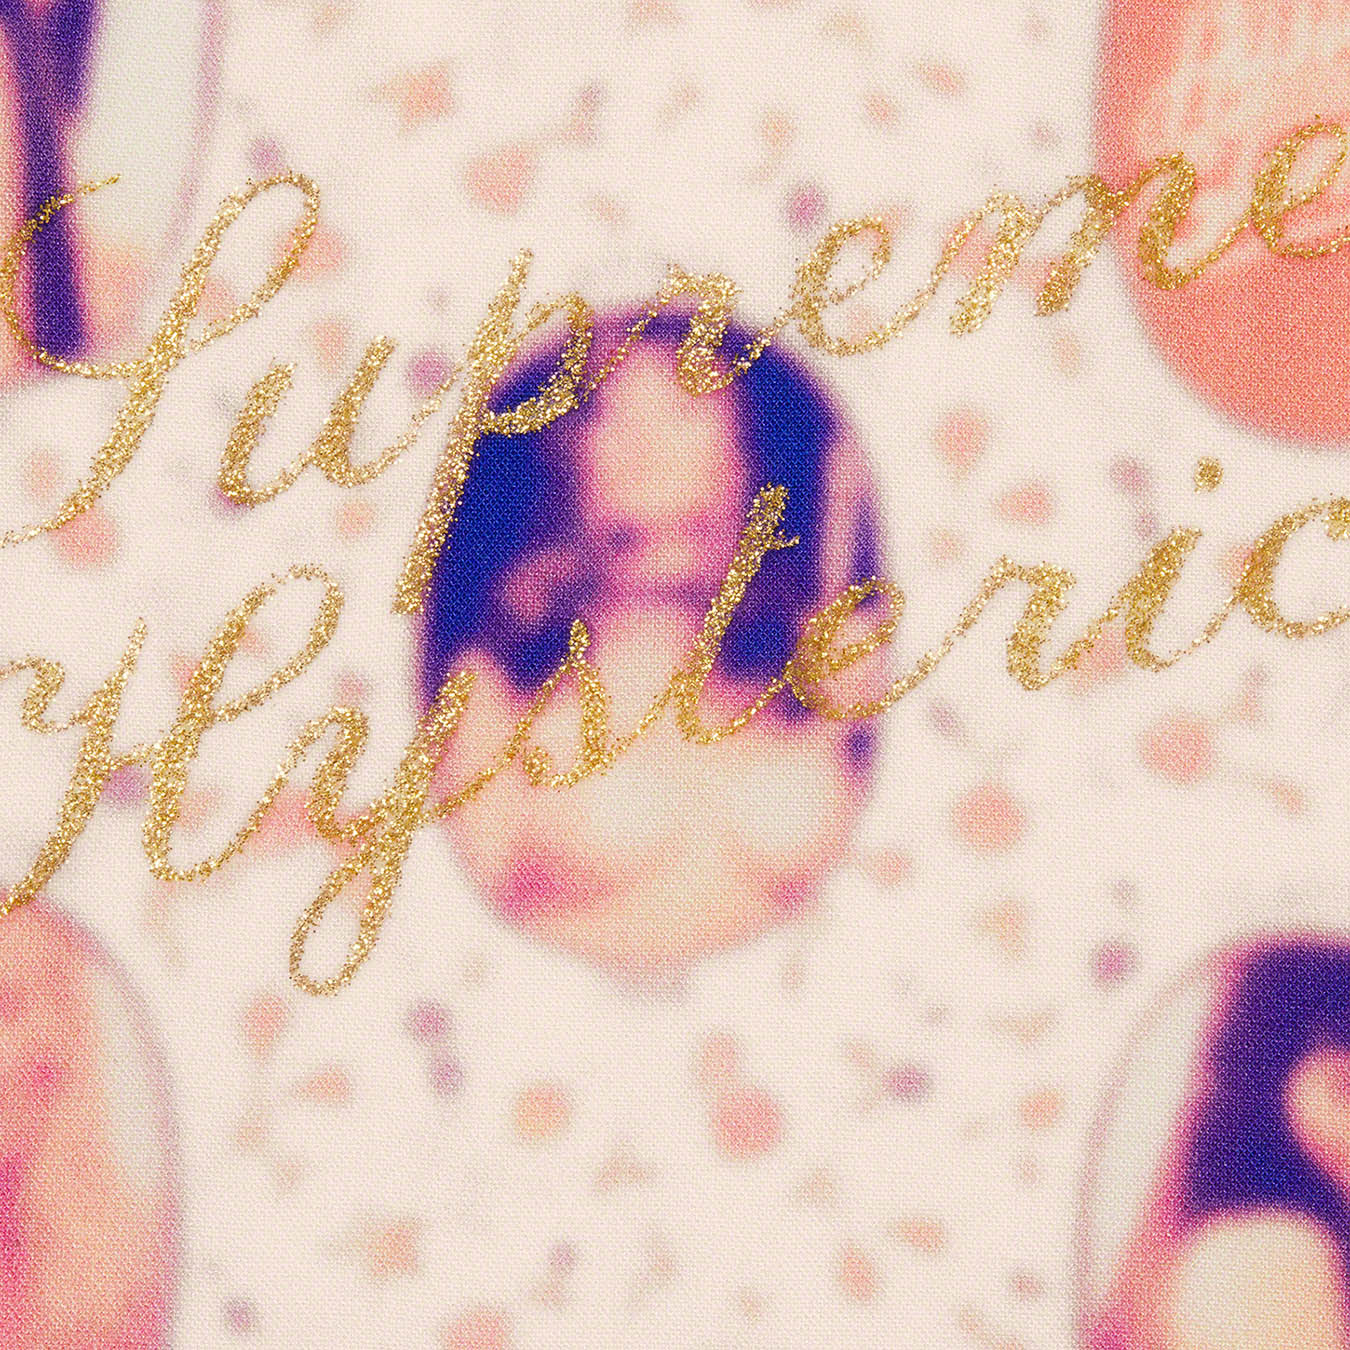 Supreme®/HYSTERIC GLAMOUR Blurred Girls Rayon S/S Shirt